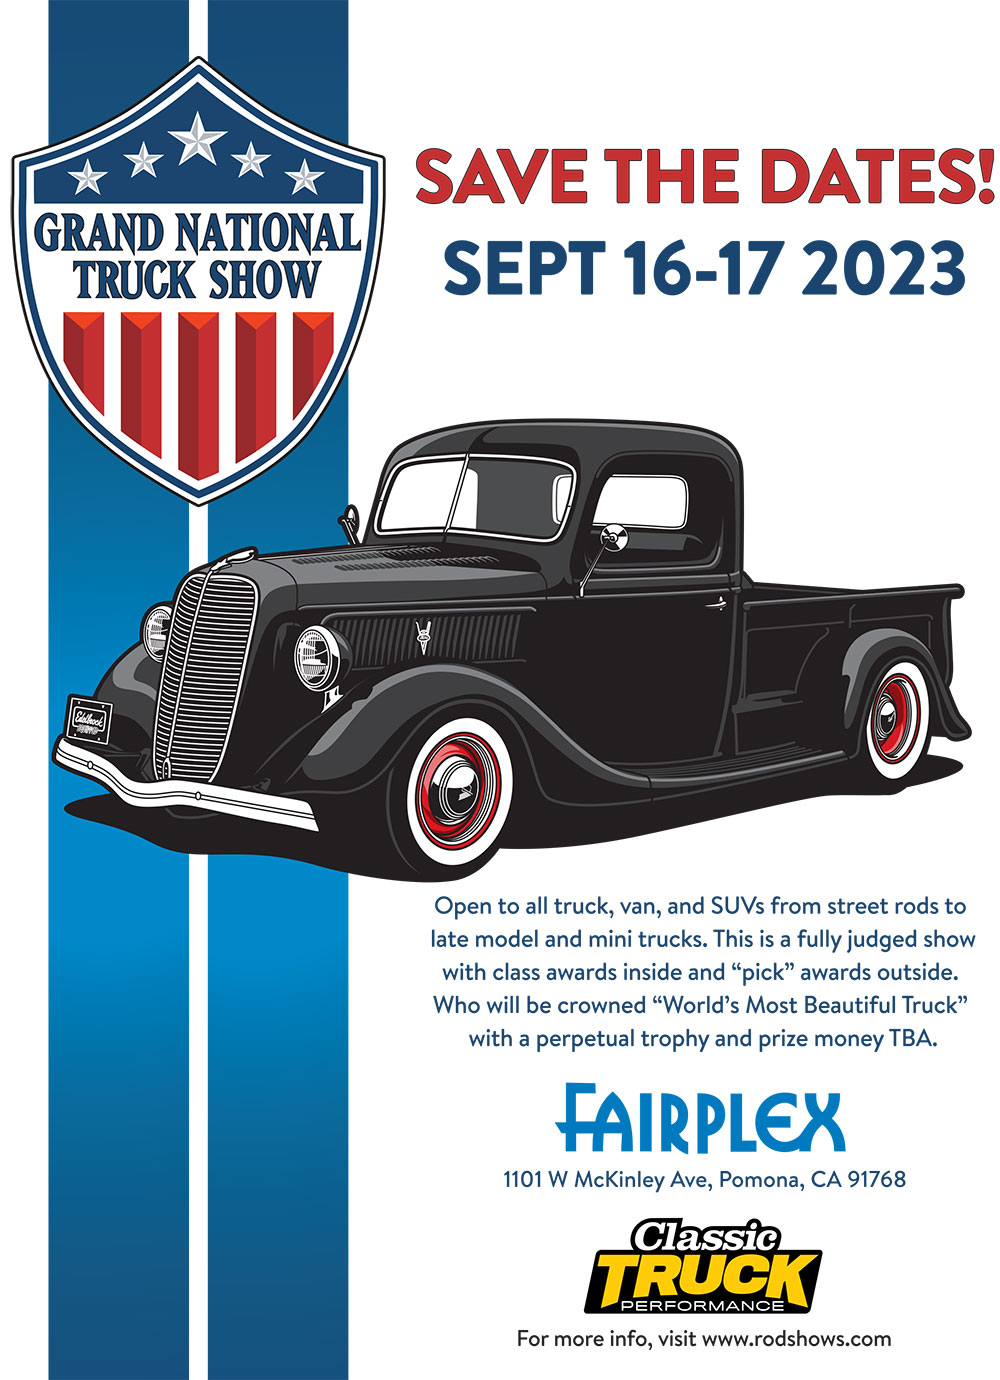 Grand National Truck Show Advertisement